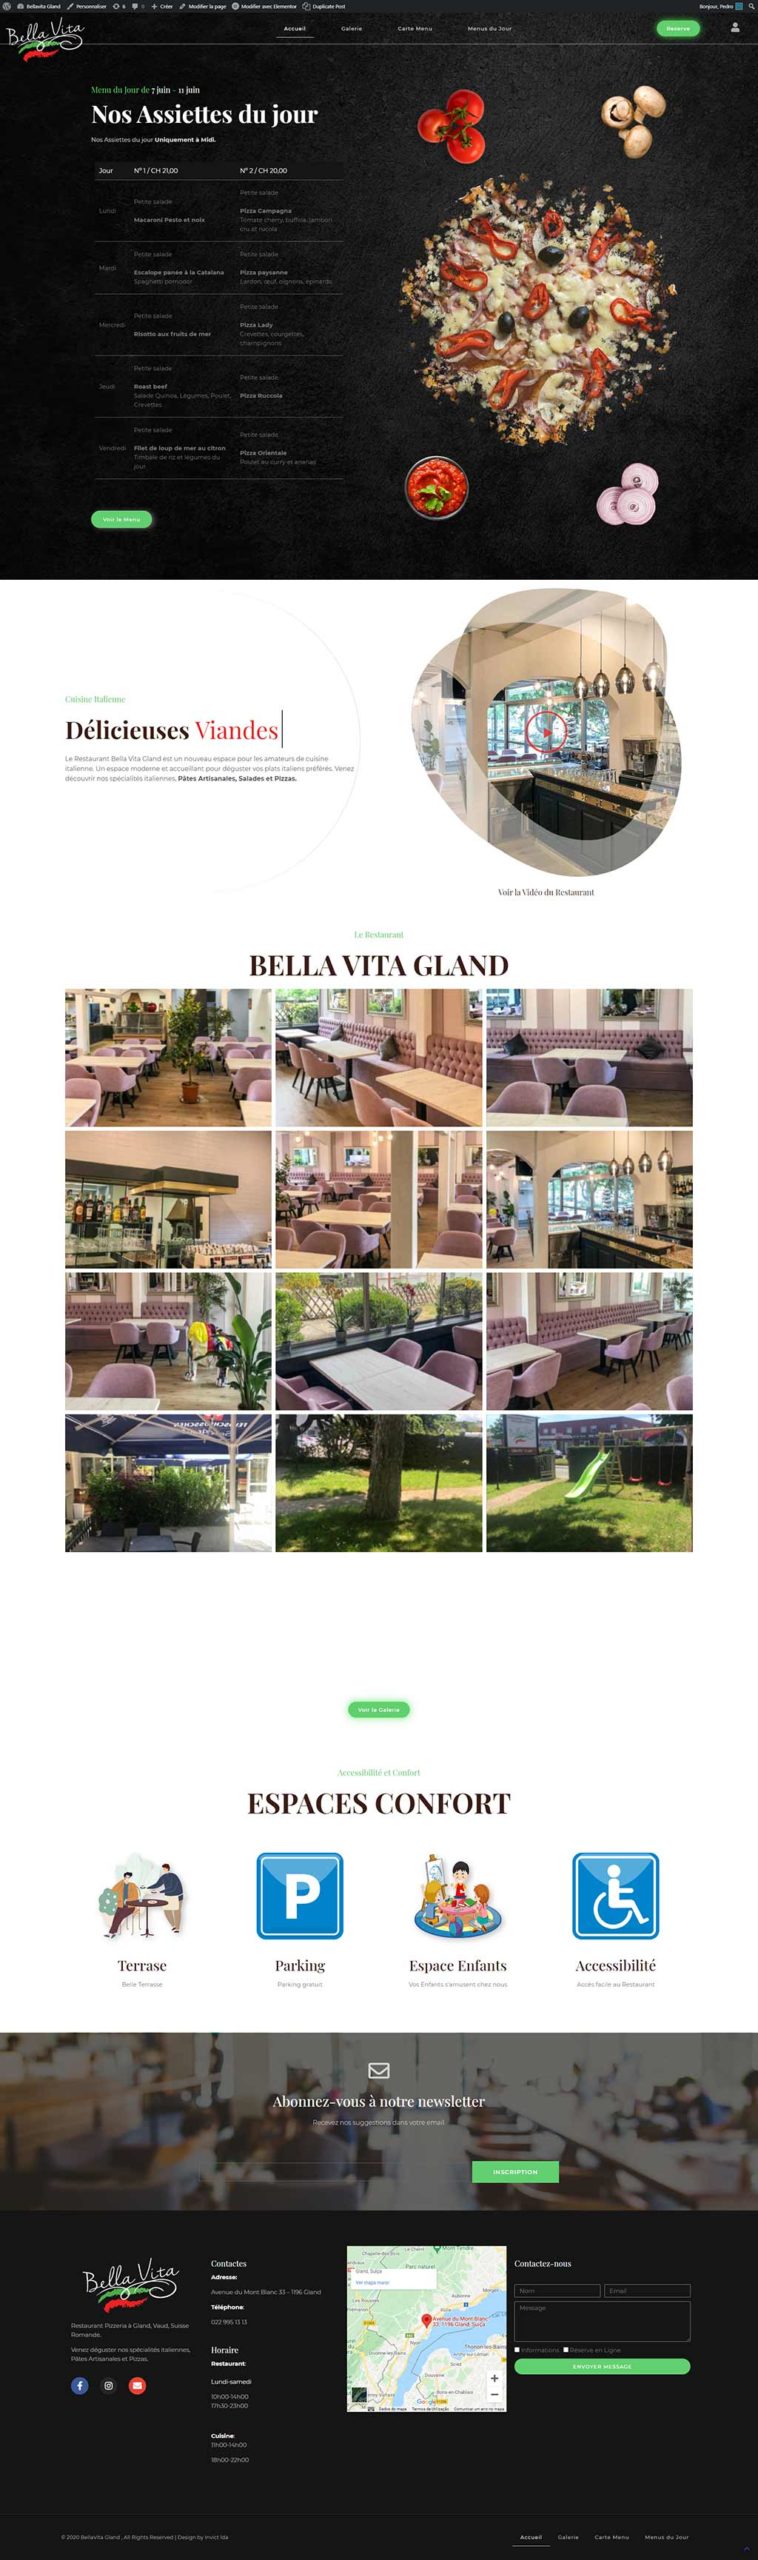 Restaurant Bella Vita aGland